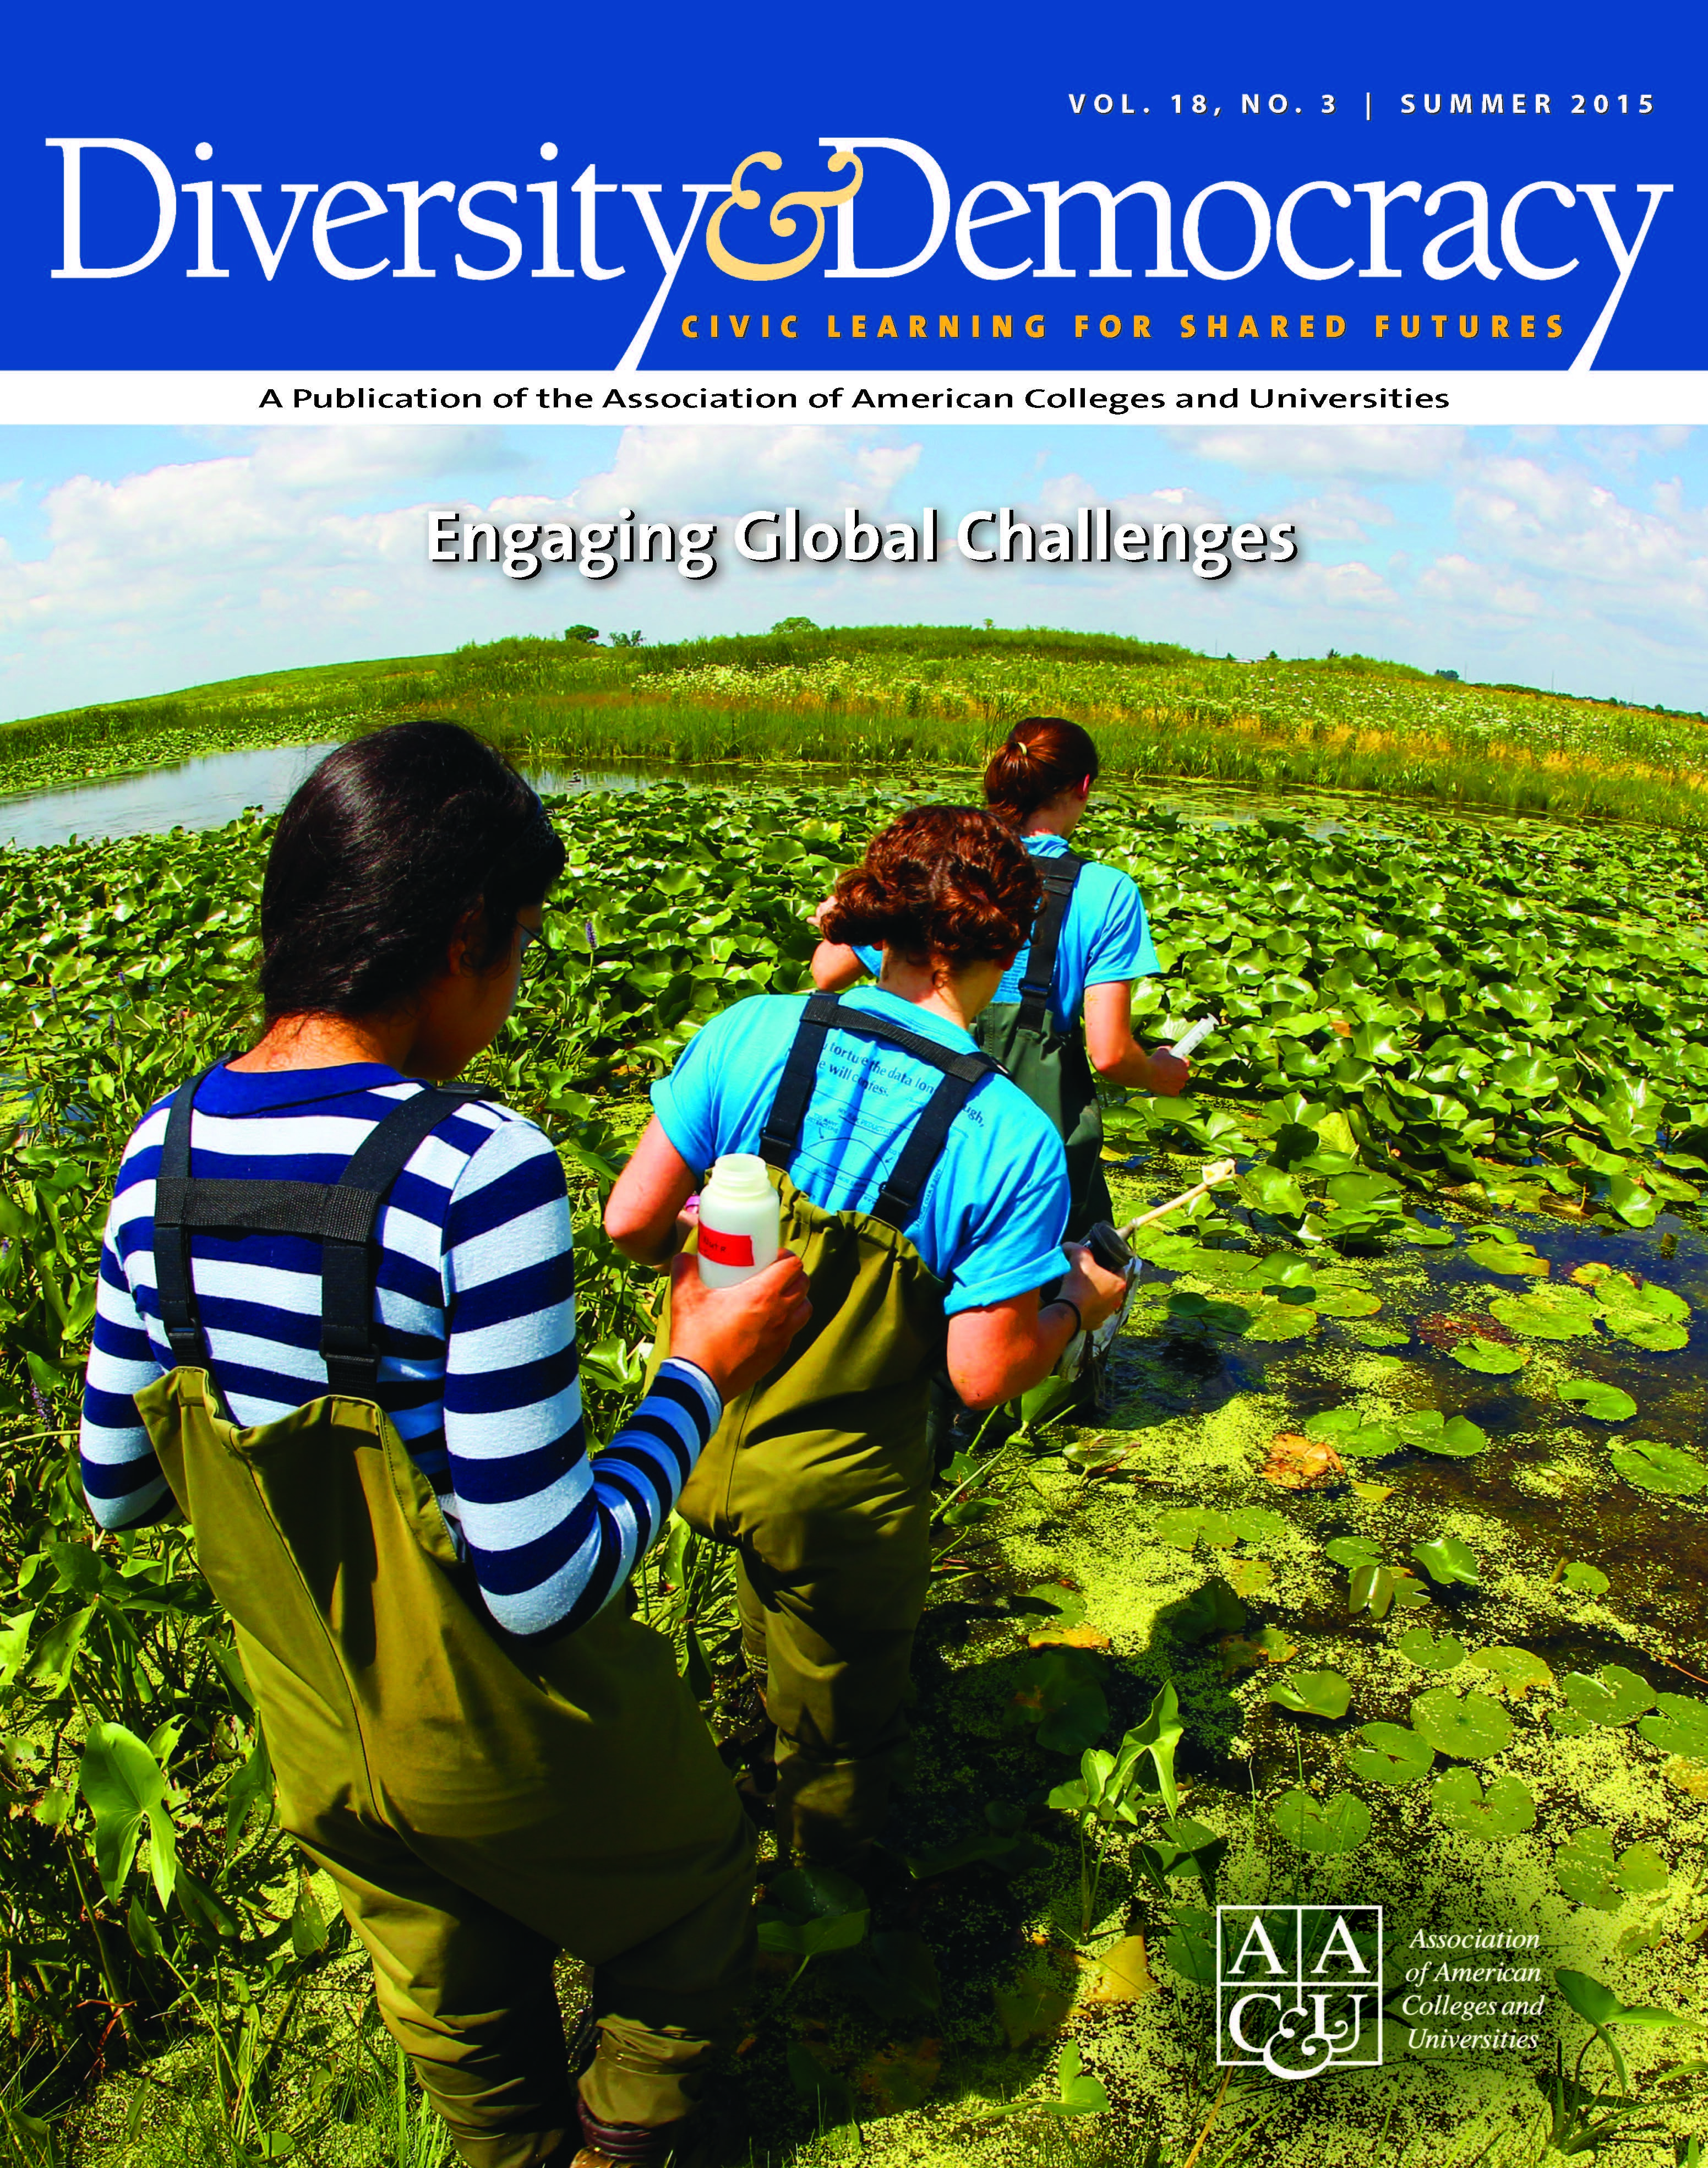 Summer 2015 issue of Diversity & Democracy magazine